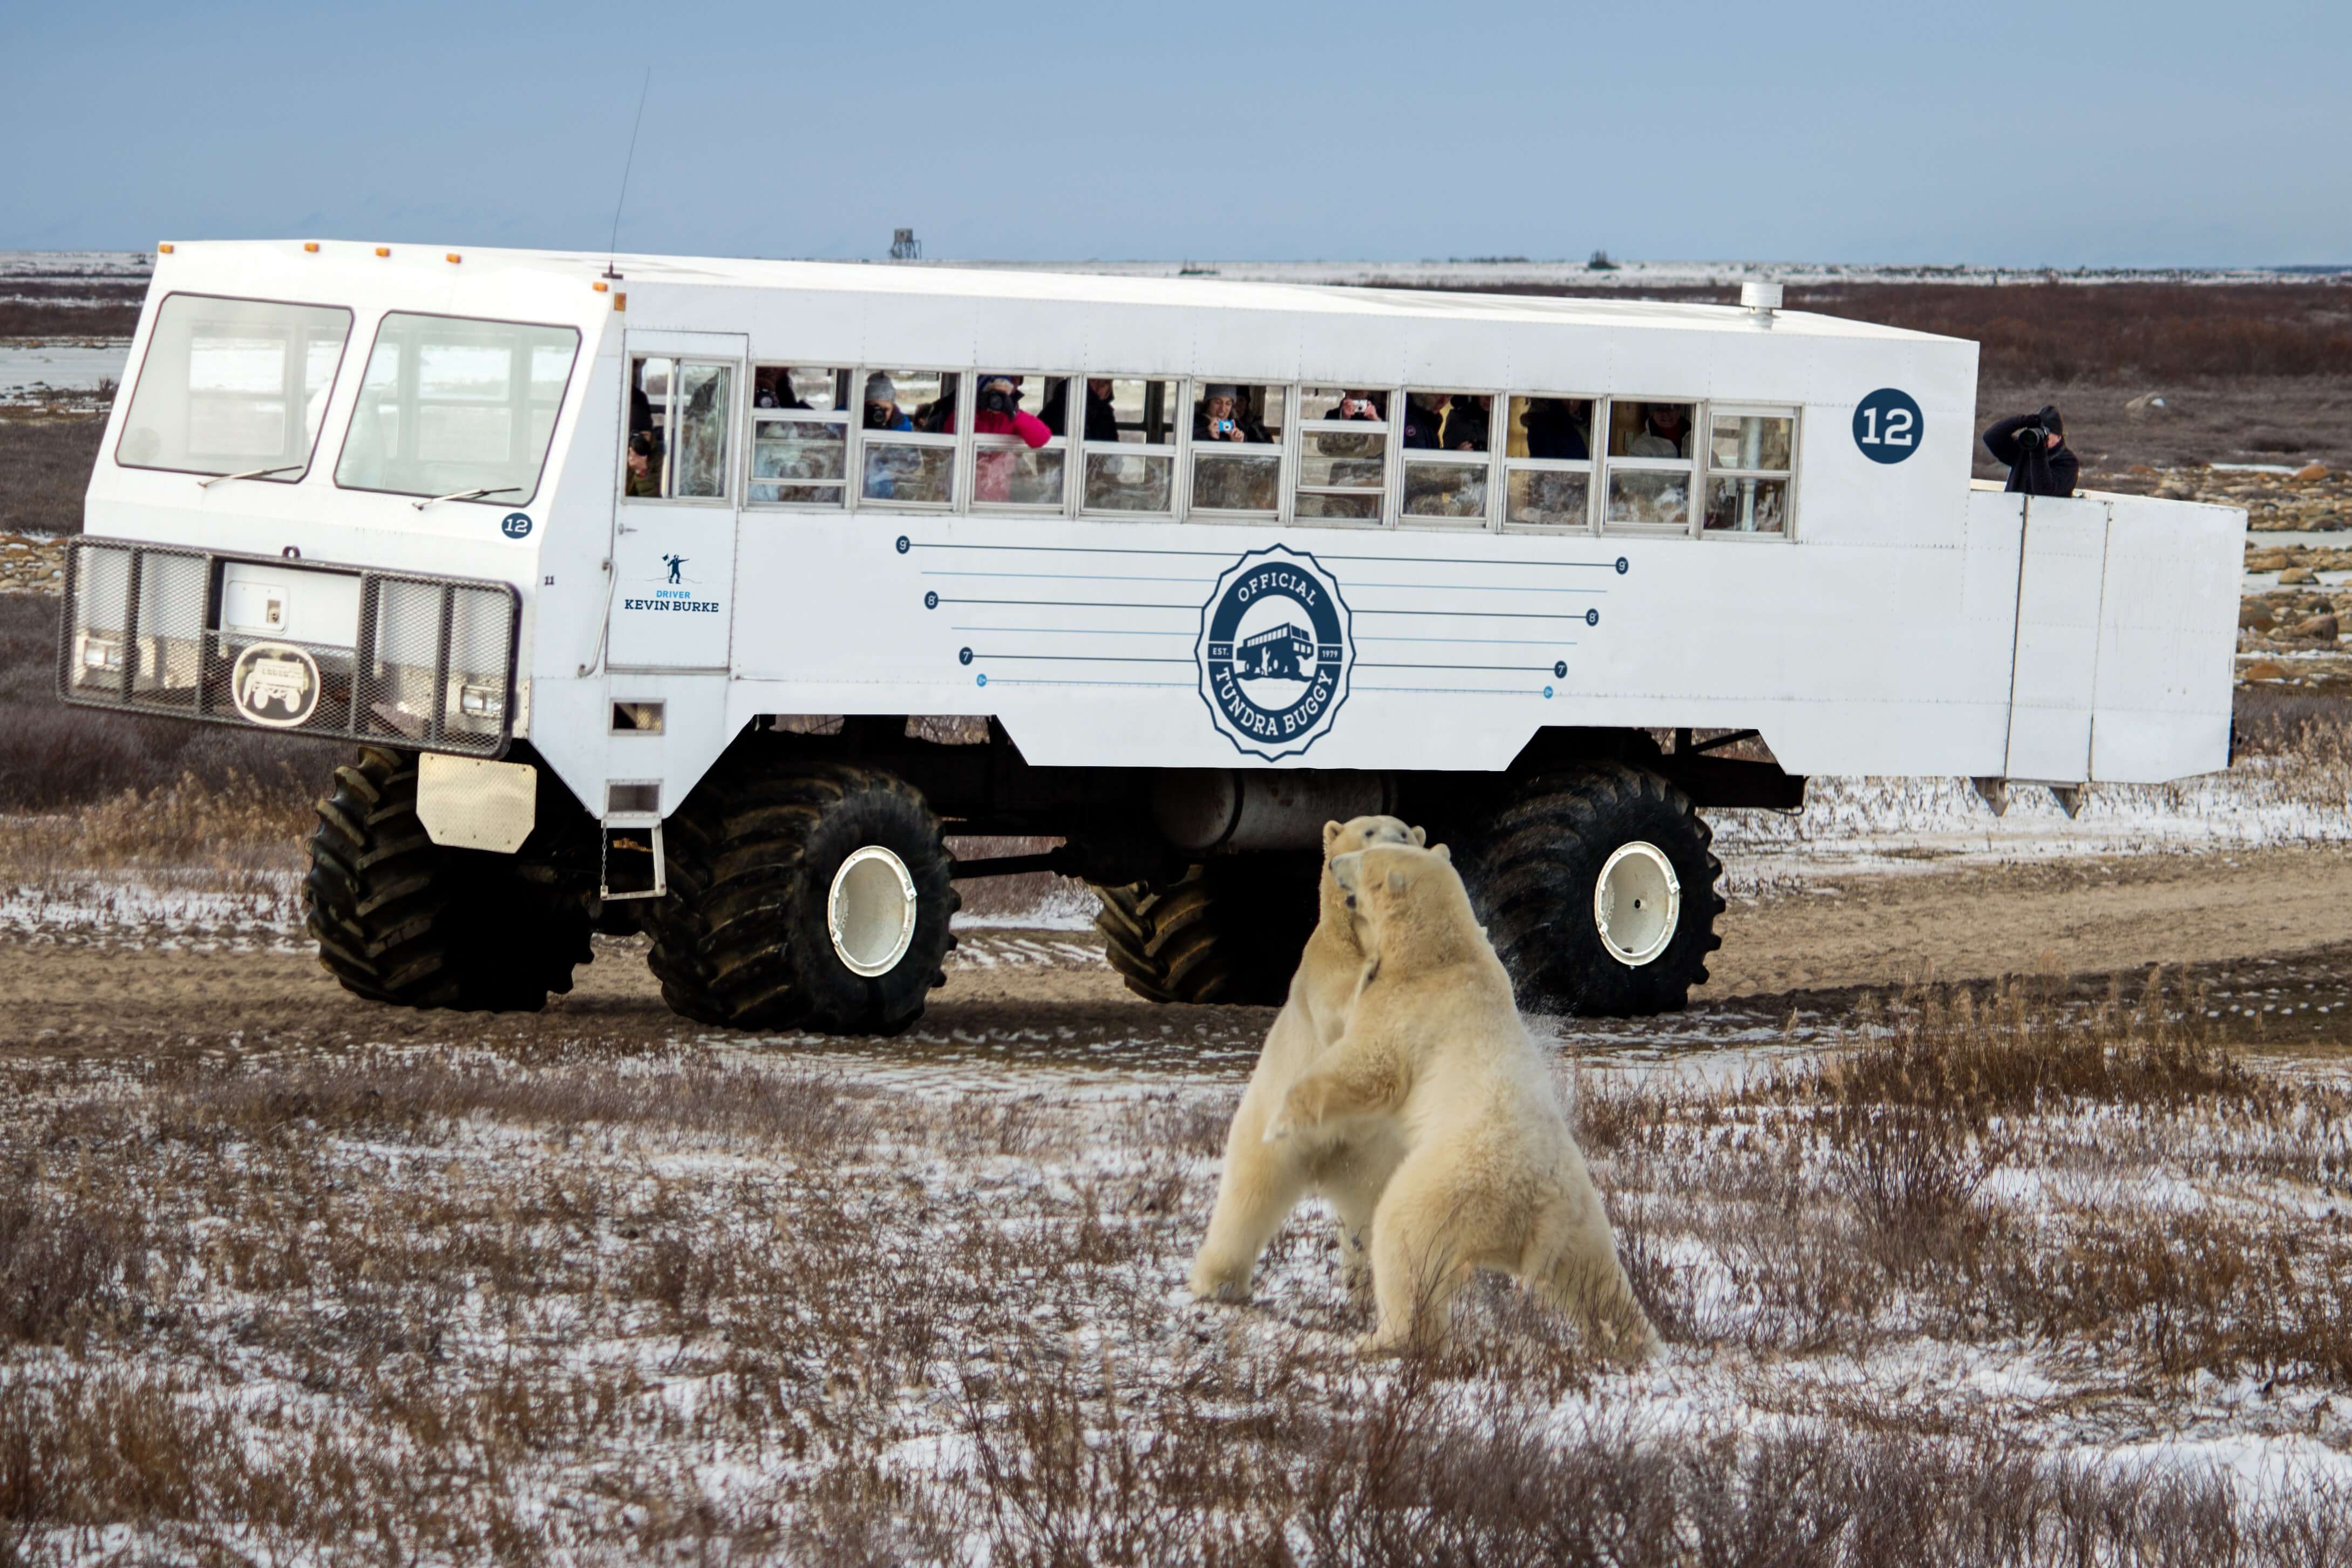 polar bear travel in herds